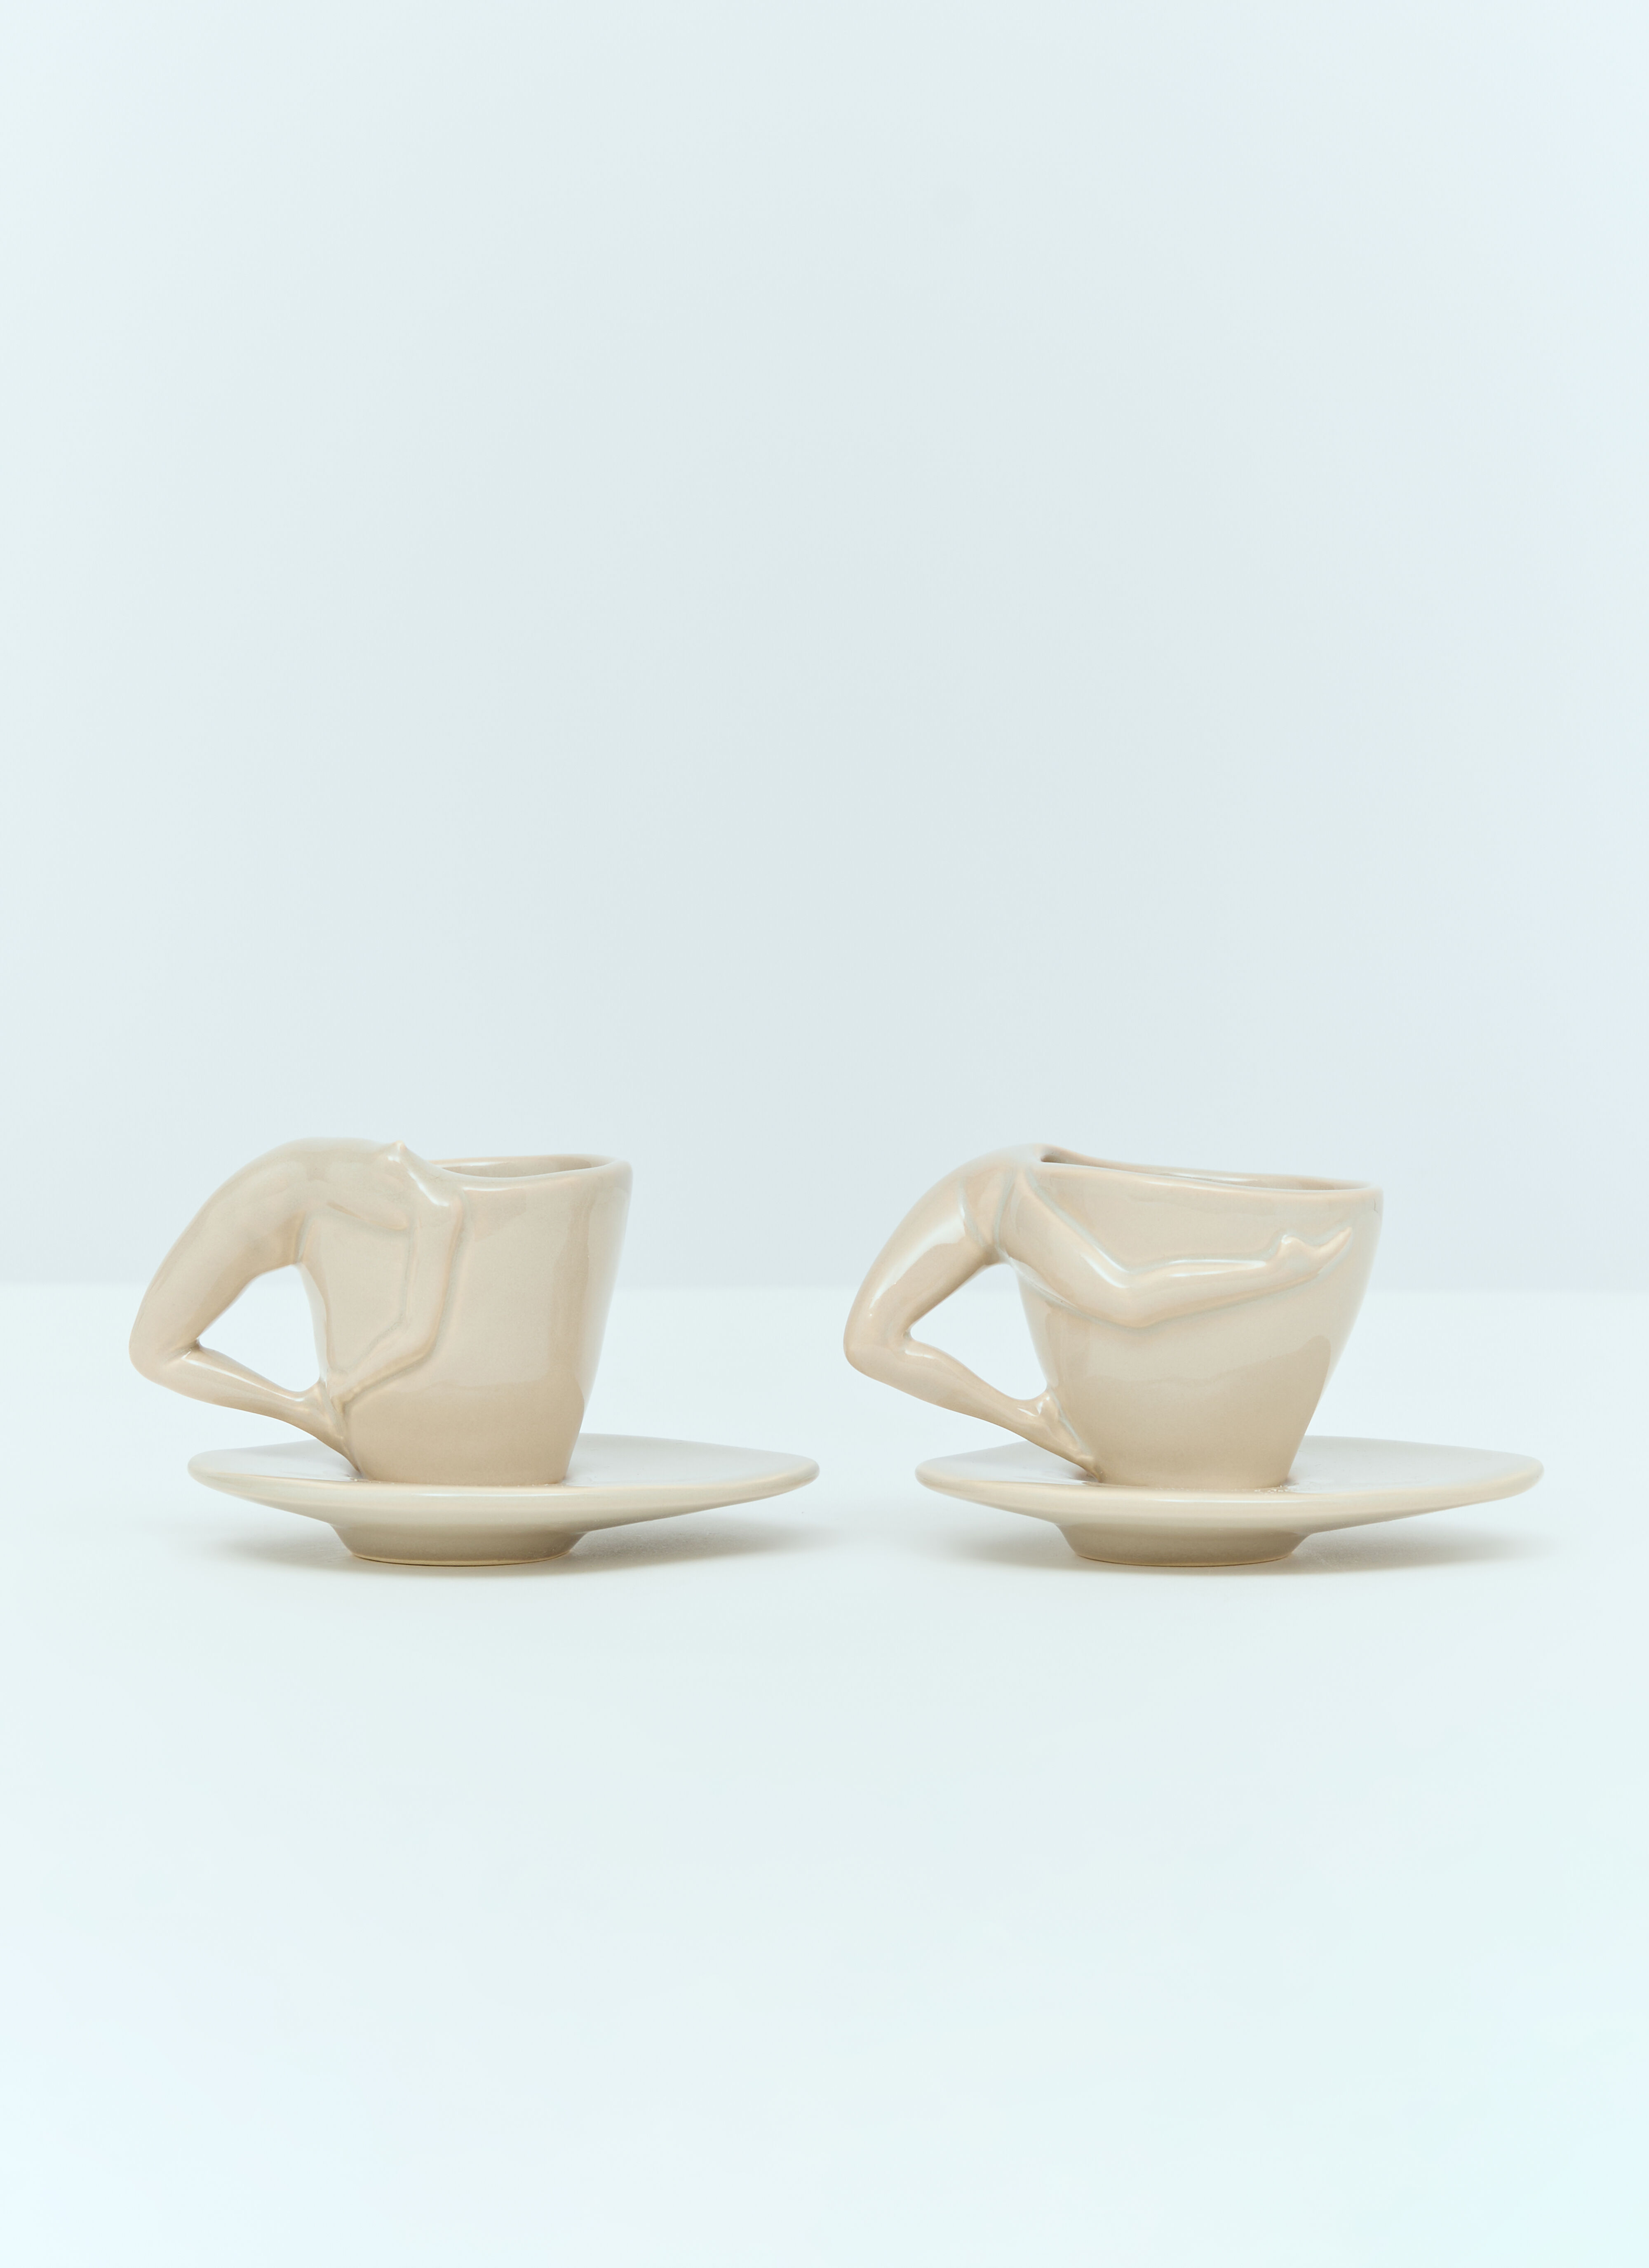 Polspotten Set Of Two Espresso Yourself Cups Multicolour wps0691145